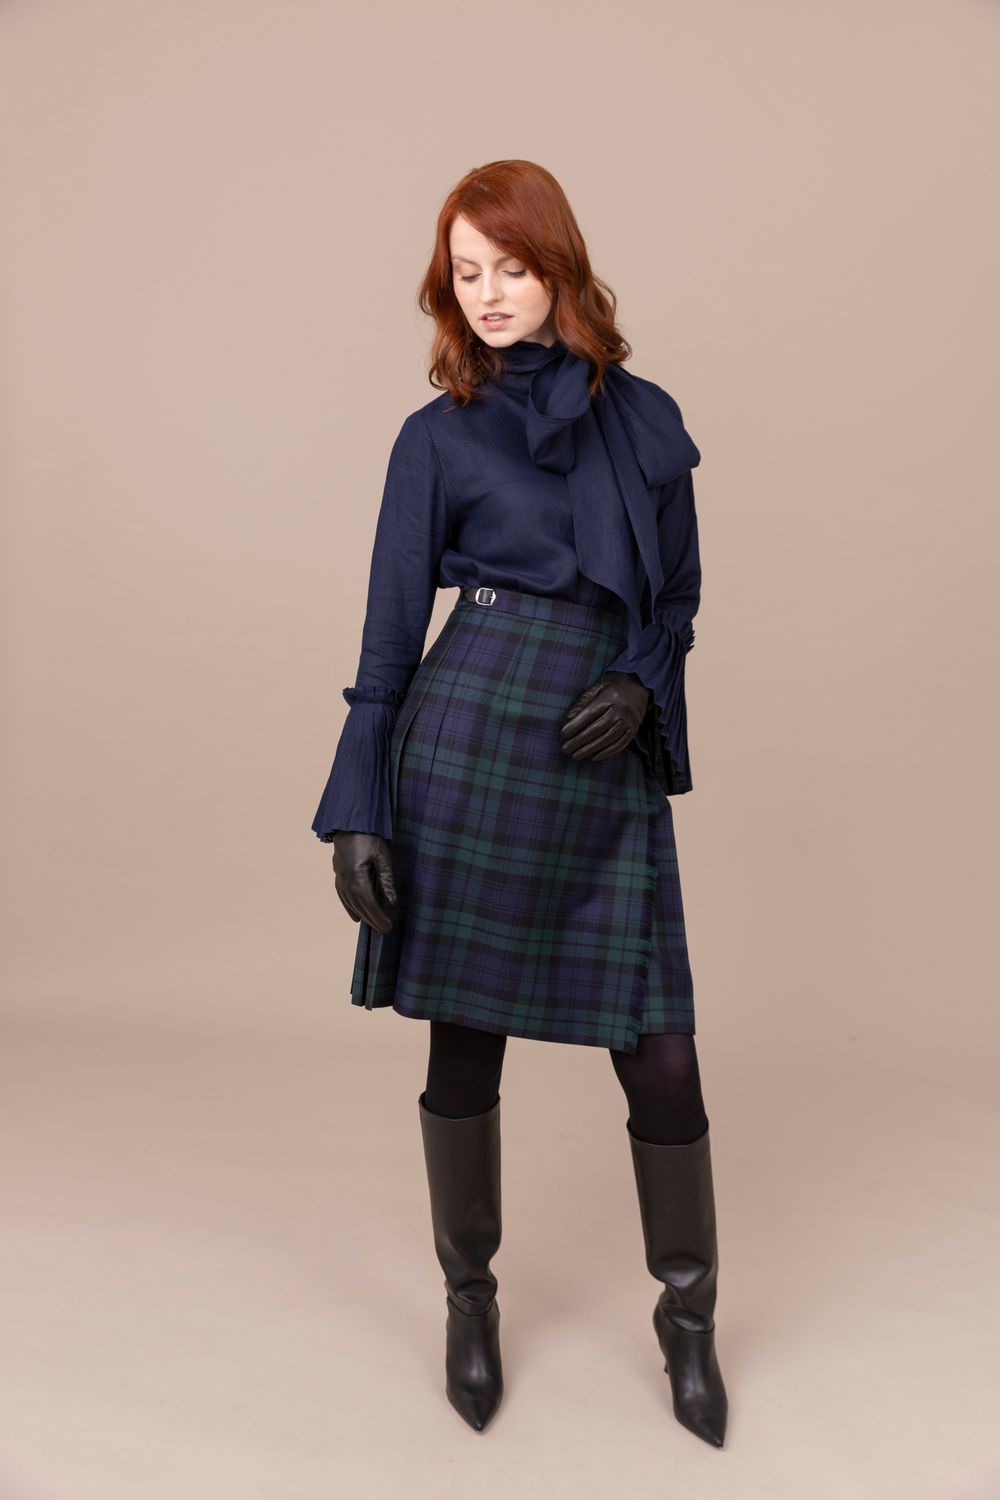 Modern Kilts | Formal Kilt | Male and Female Kilt for Sale – O